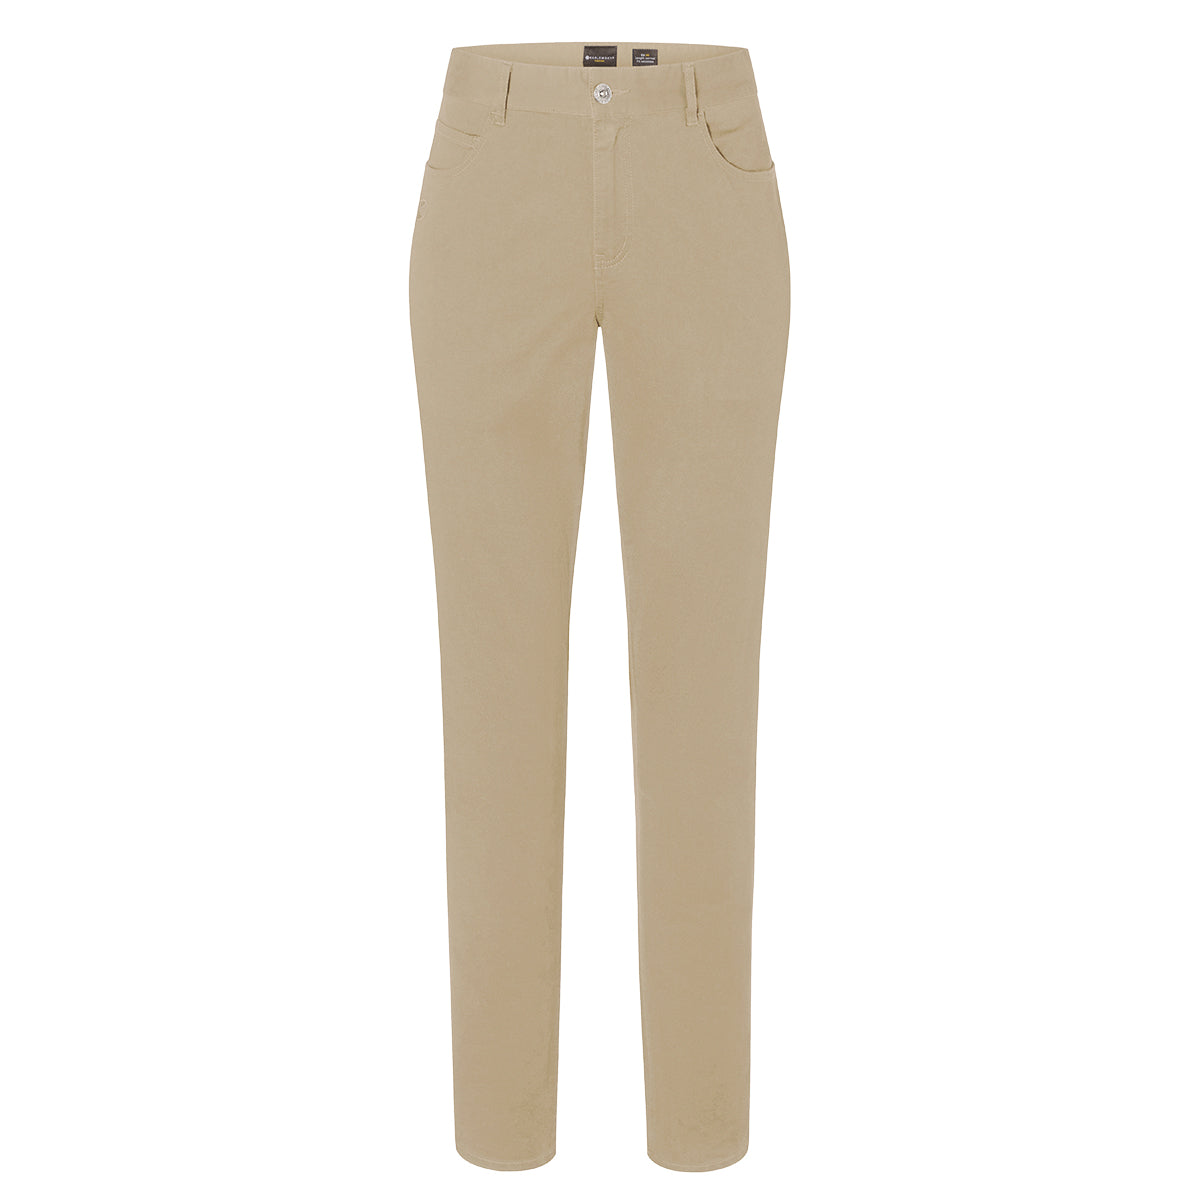 Karlowsky - 5-lomme bukser til damer - Pebble grey - Størrelse: 54